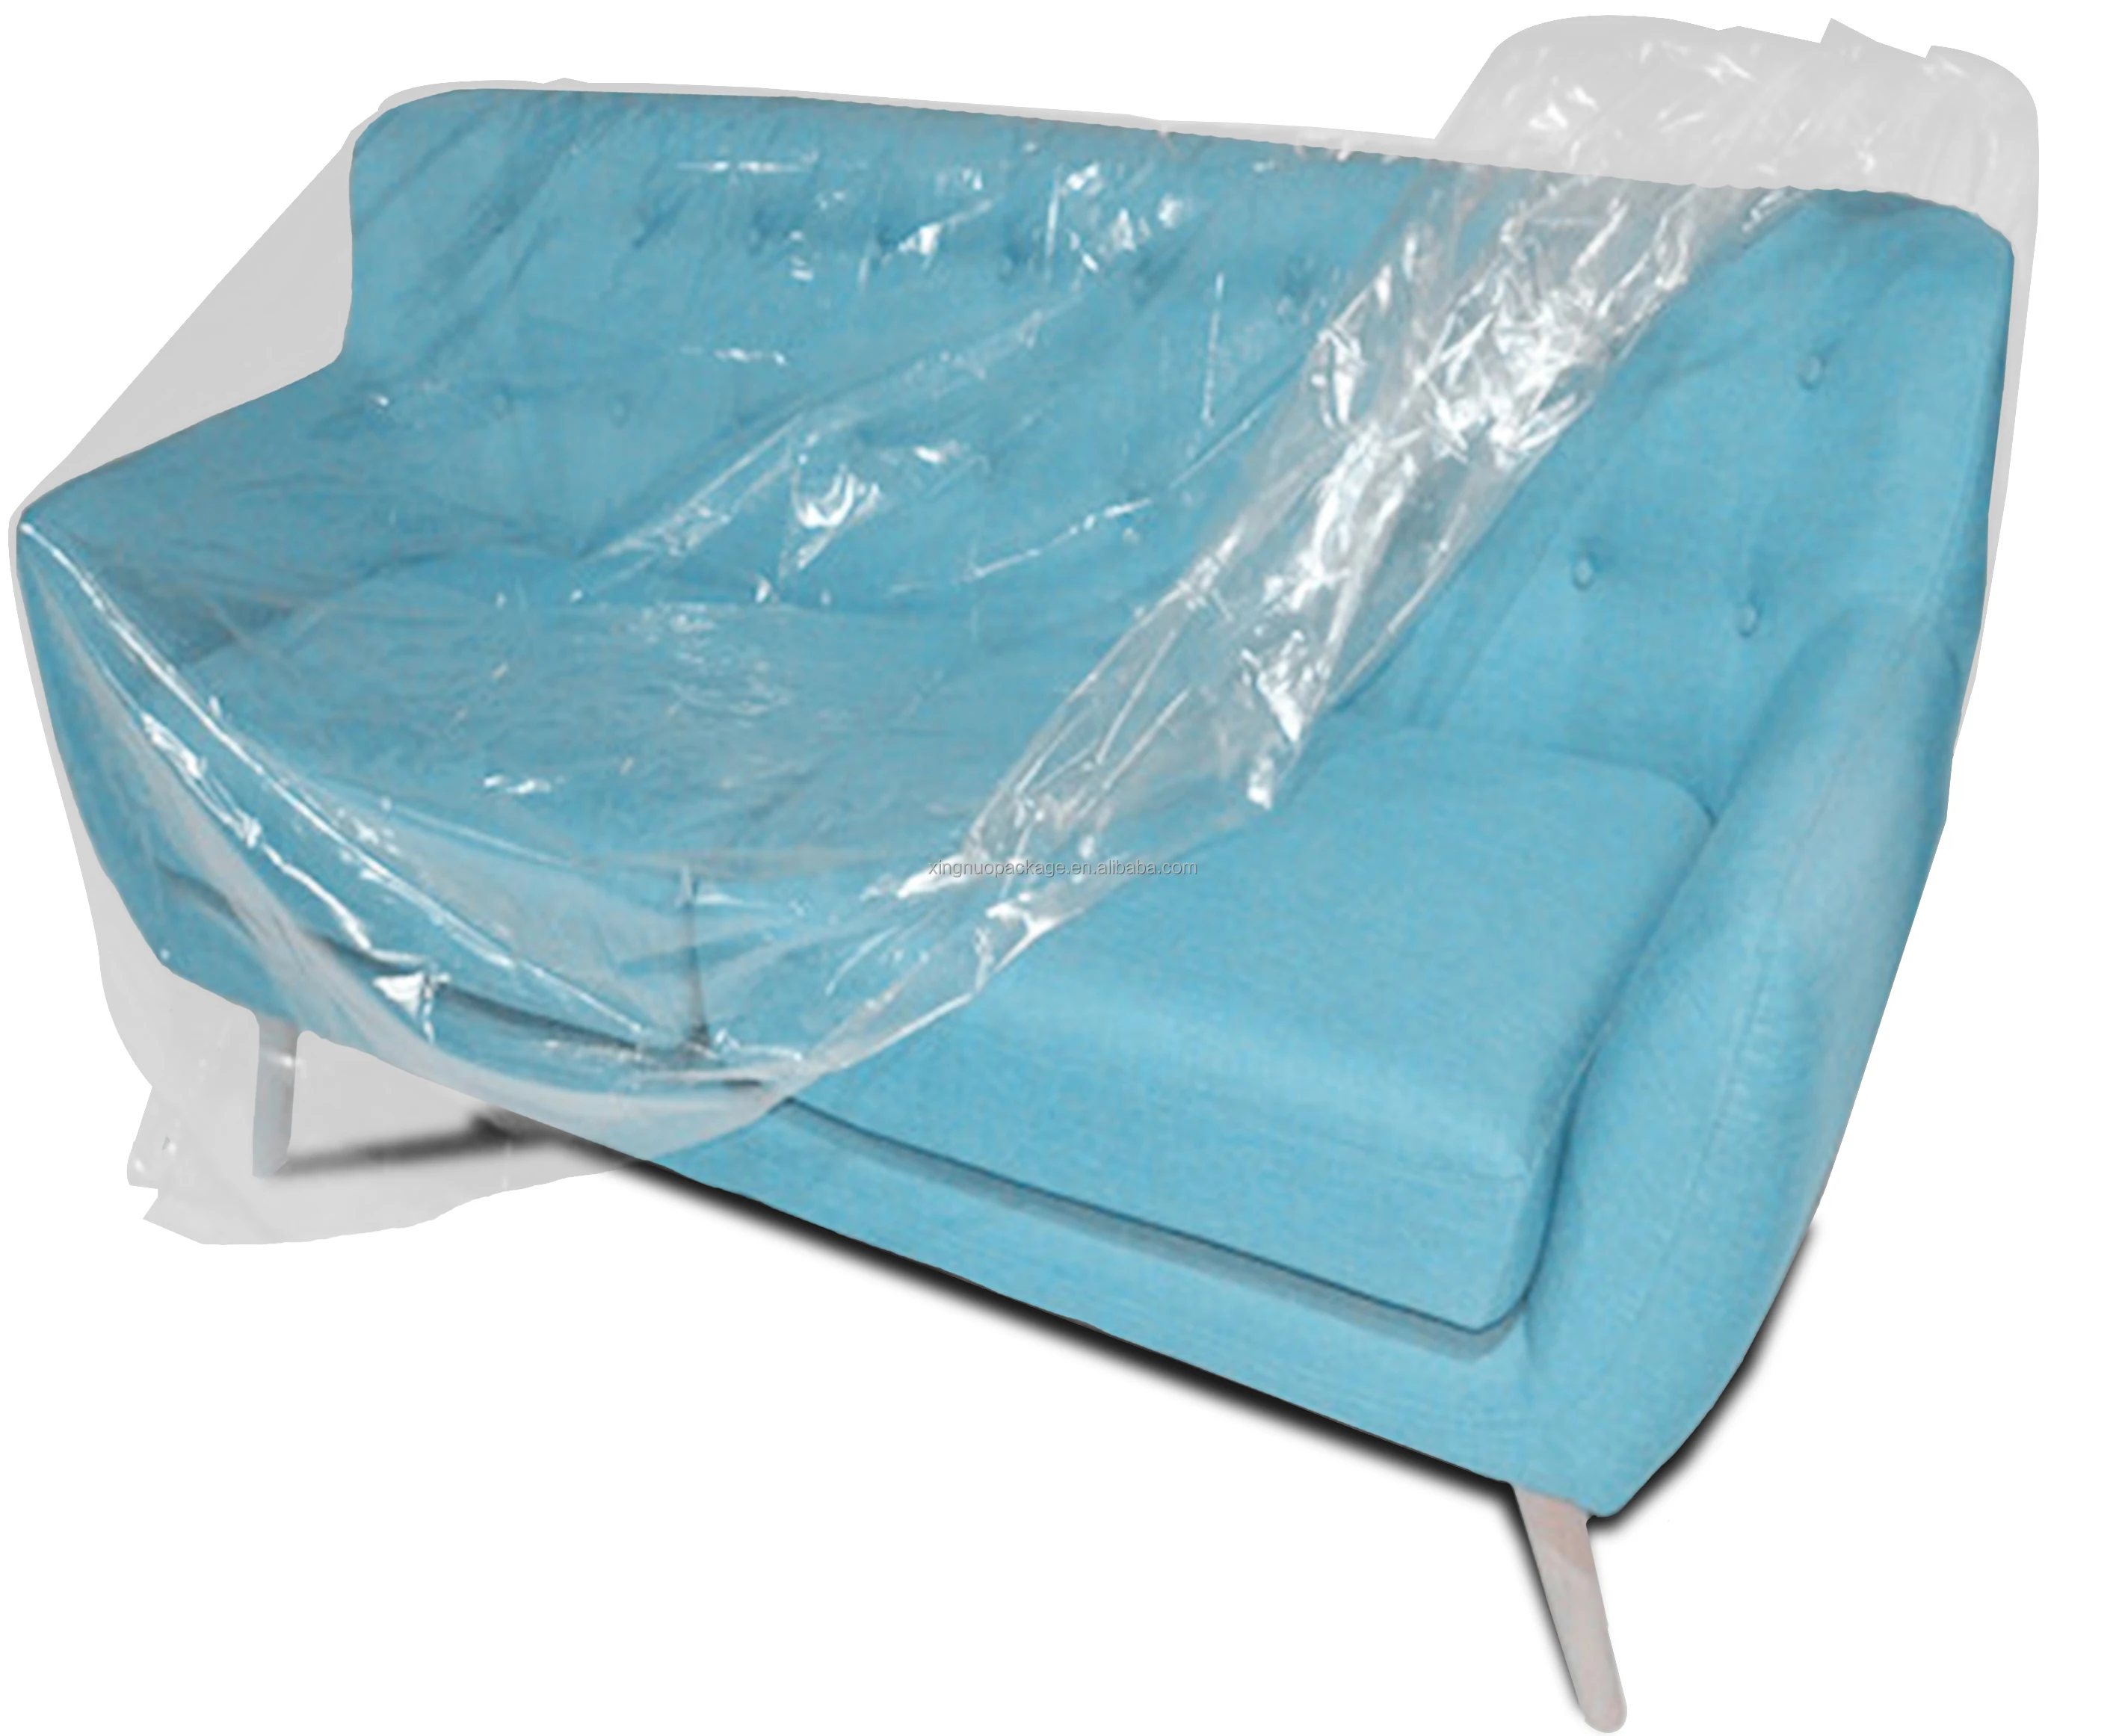 Plastic Sofa Covers, Moving Supplies